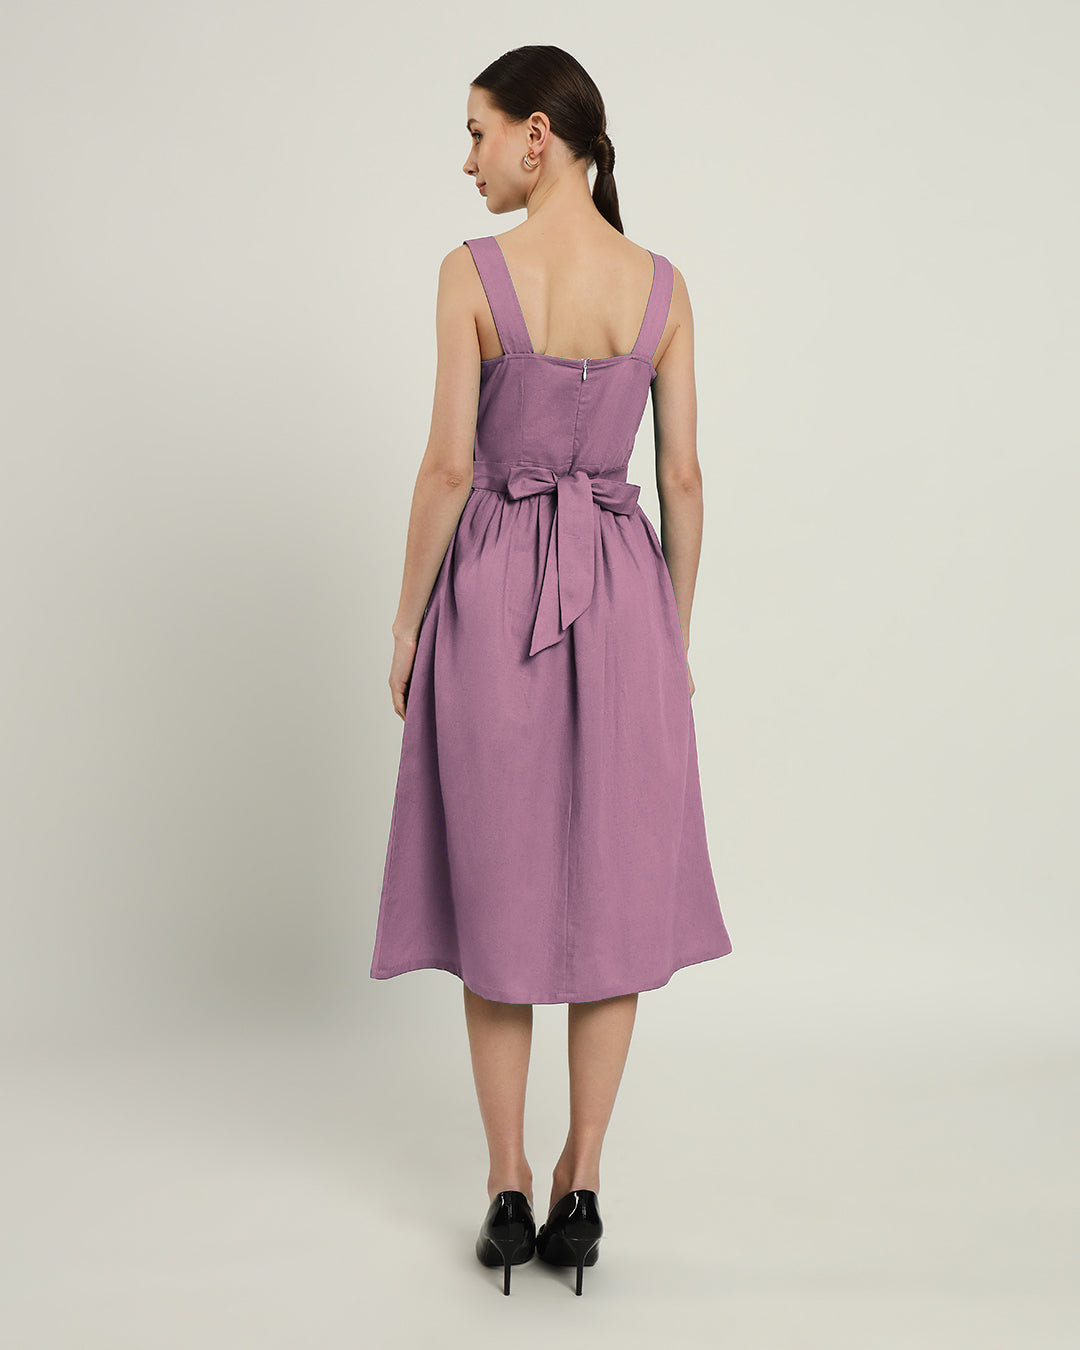 The Mihara Purple Swirl Dress